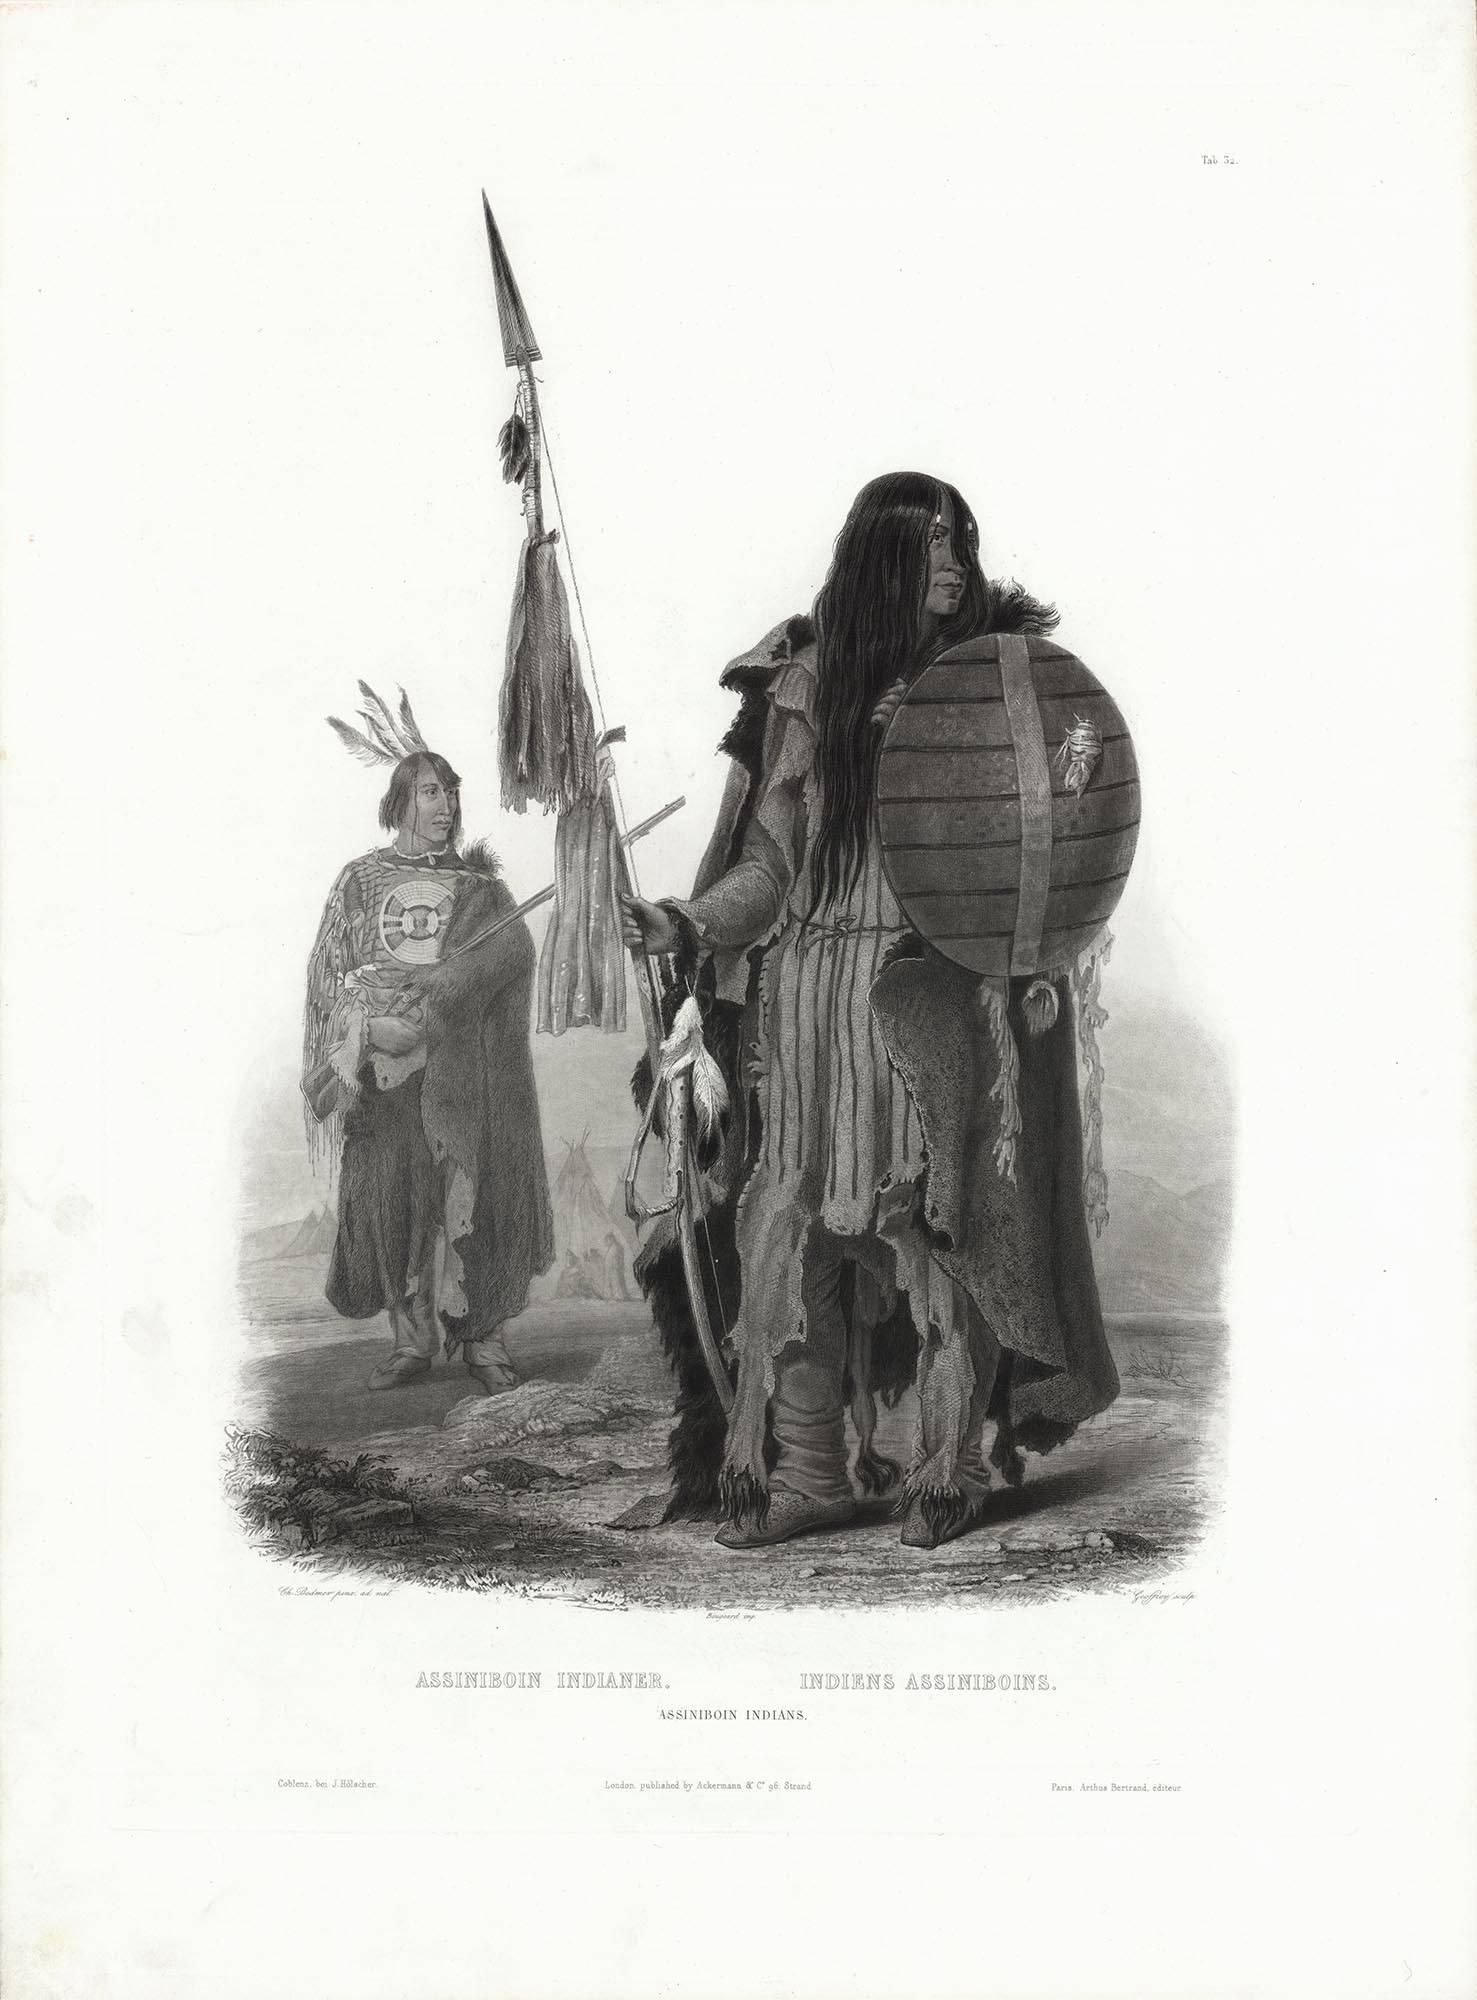 Karl Bodmer Portrait Print - Assiniboin Indians. Tab. 32.